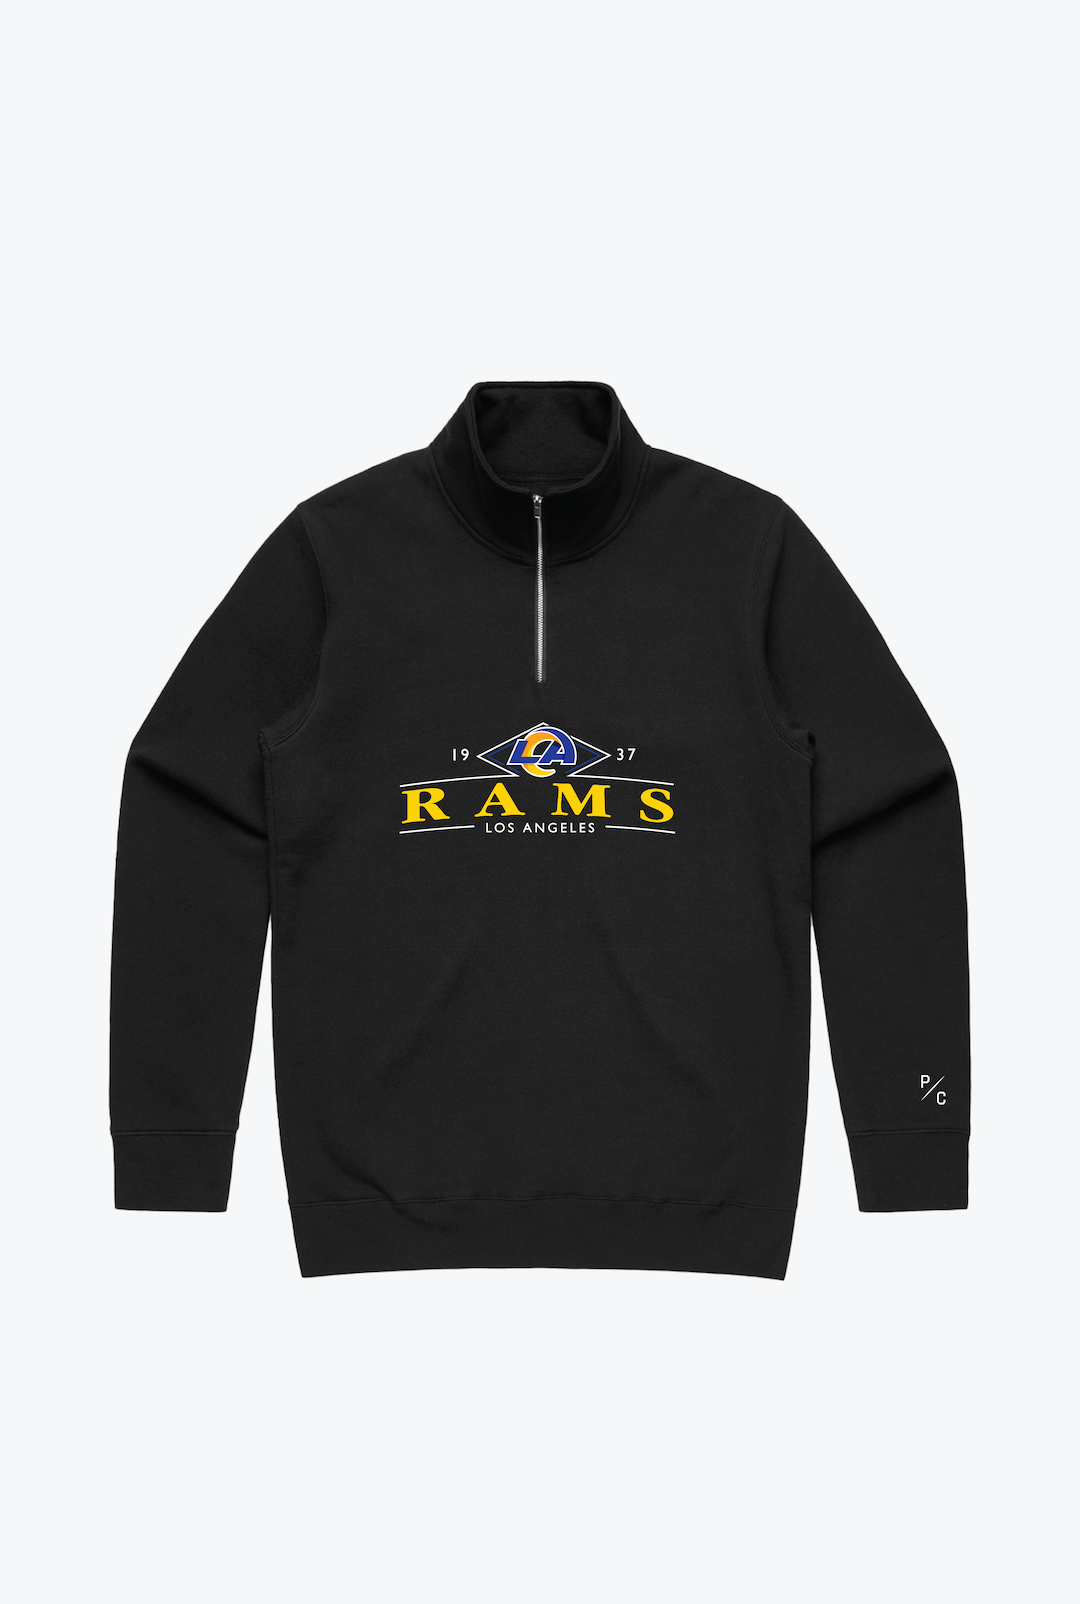 Los Angeles Rams Quarter Zip - Black